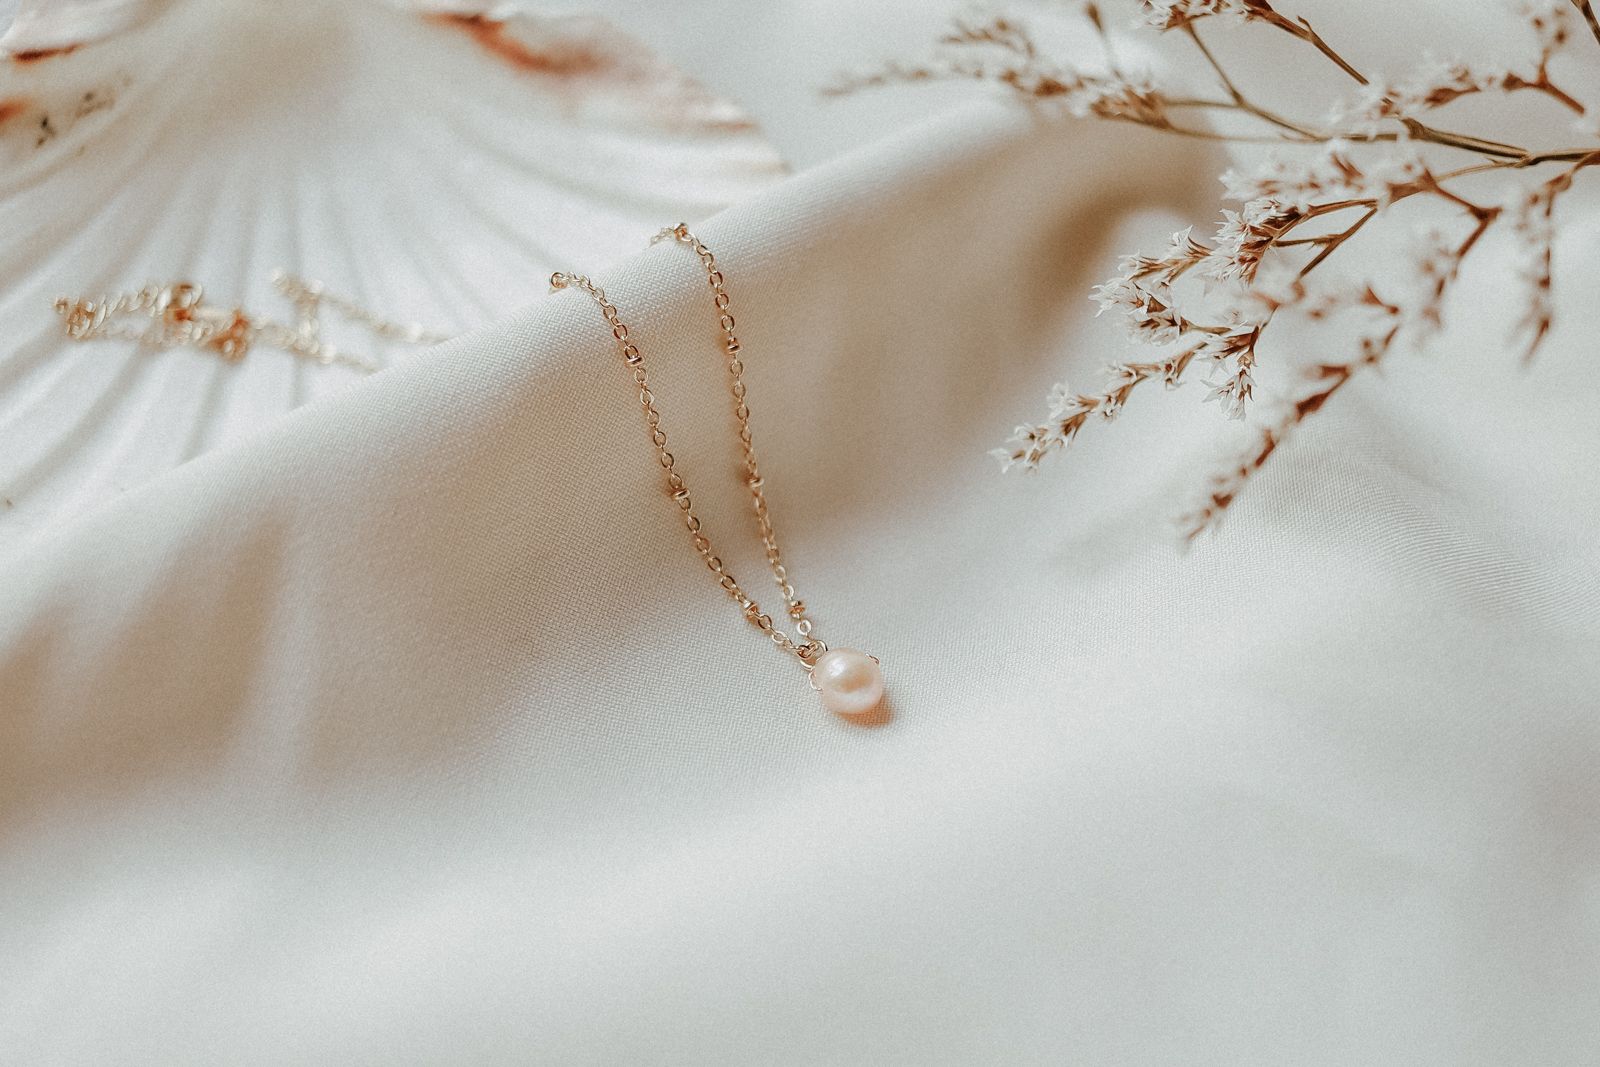  Perle Hintergrundbild 1600x1067. LIMITED EDITION: Magnificent Kette mit Perle in Apricot